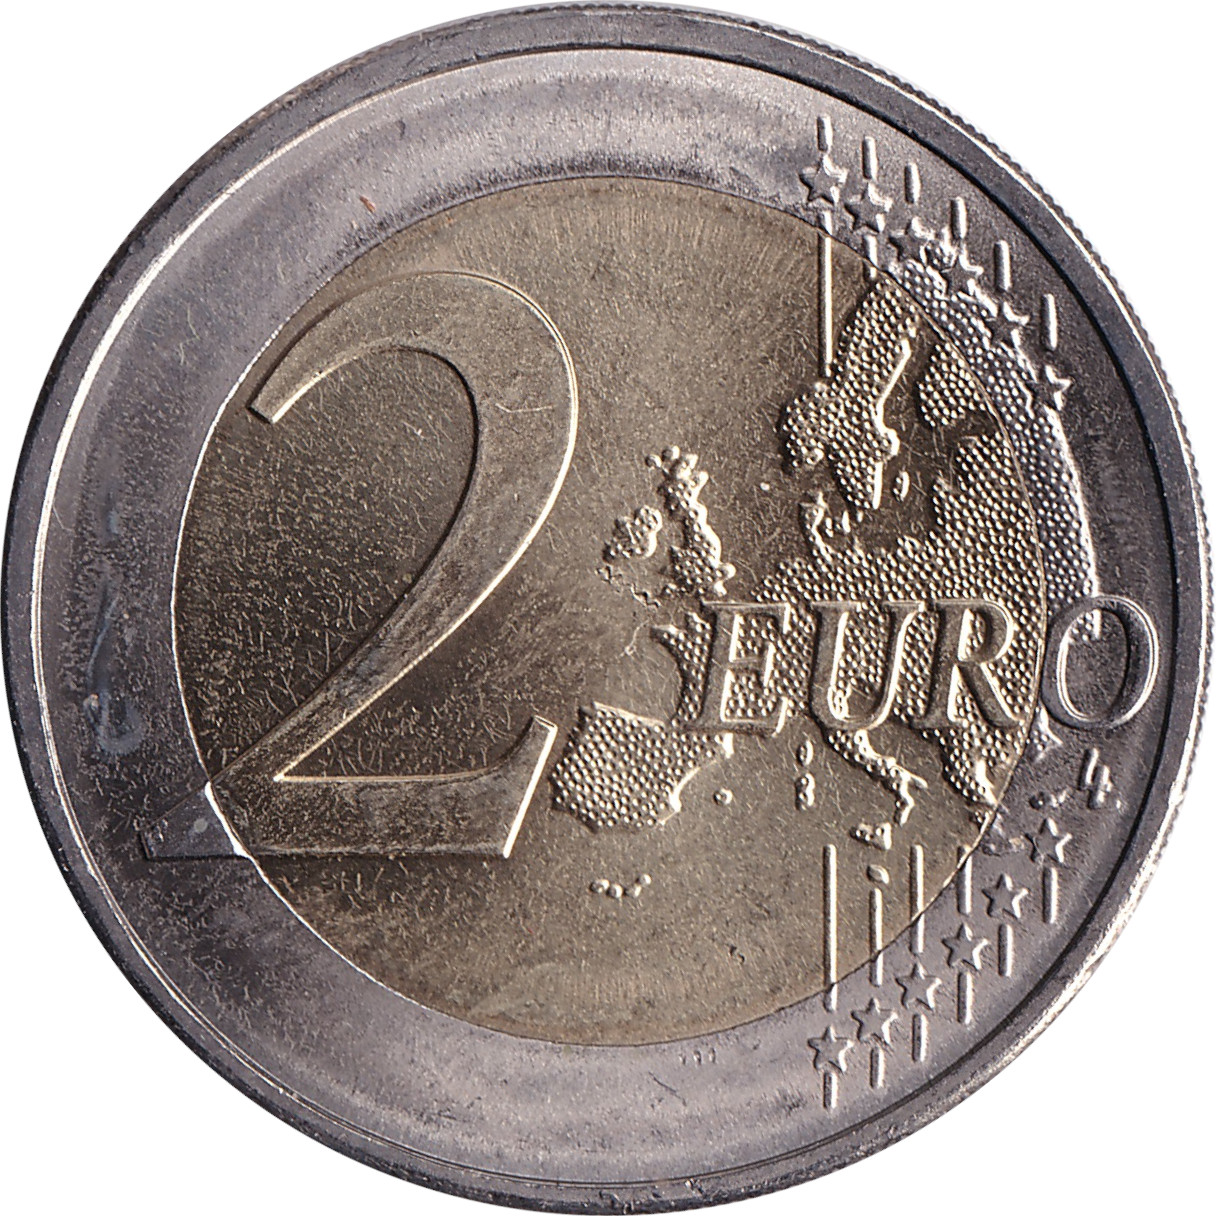 2 euro - North Rhenany Westphalia